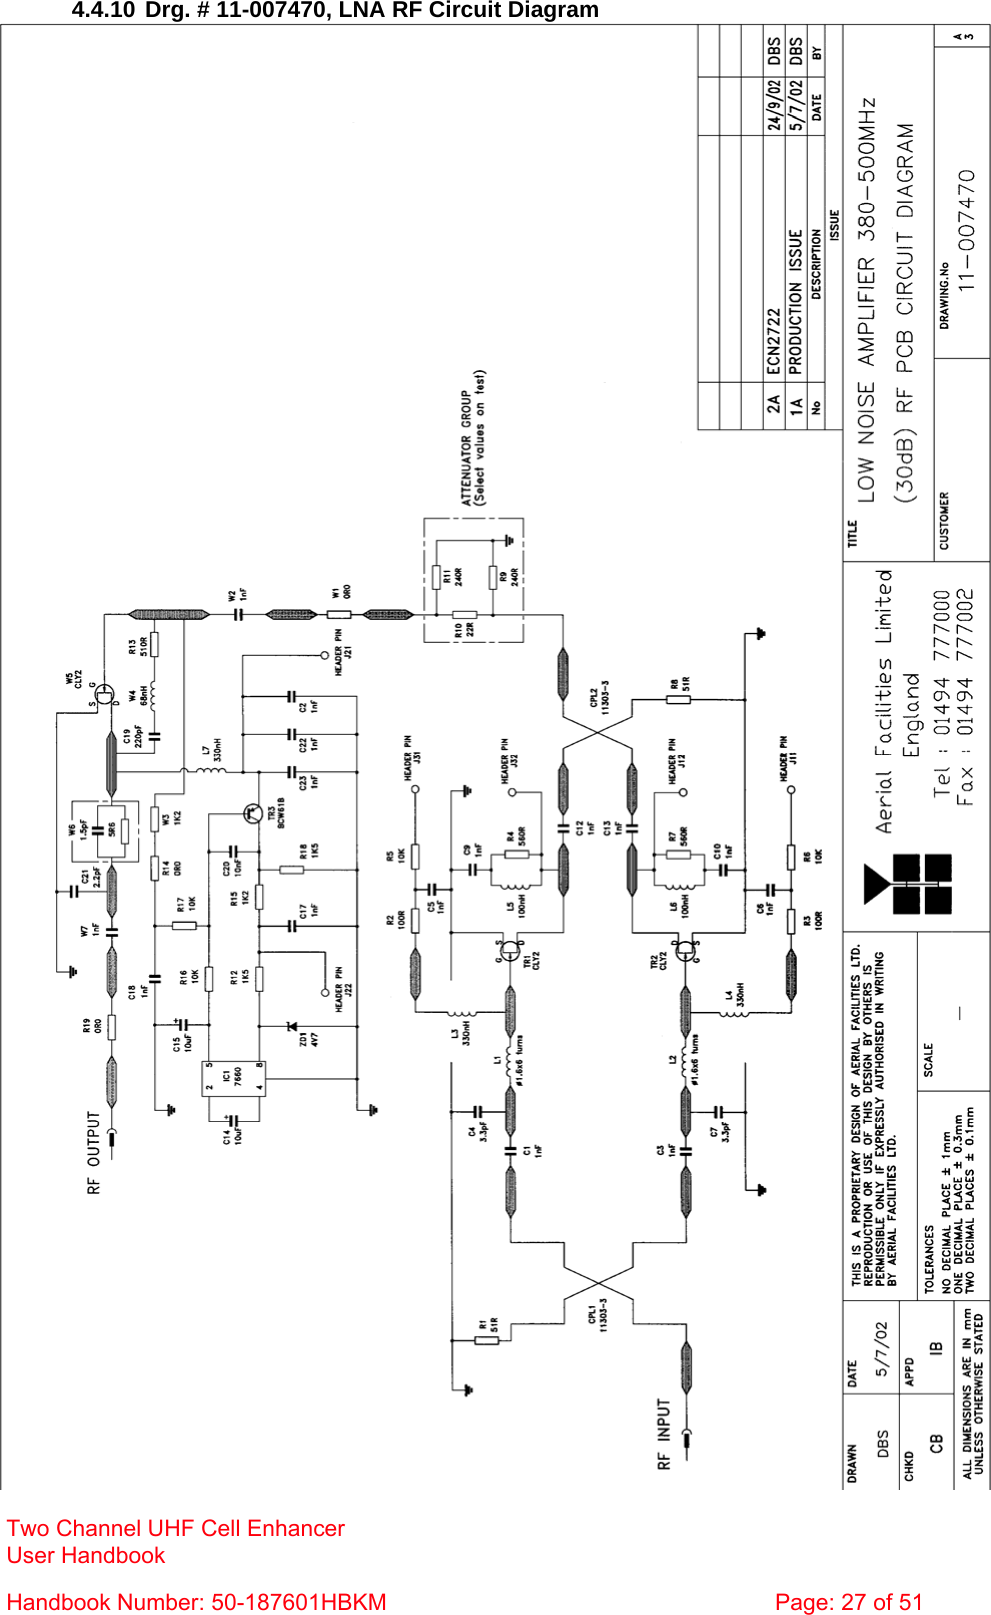  4.4.10 Drg. # 11-007470, LNA RF Circuit Diagram  Two Channel UHF Cell Enhancer User Handbook Handbook Number: 50-187601HBKM  Page: 27 of 51  